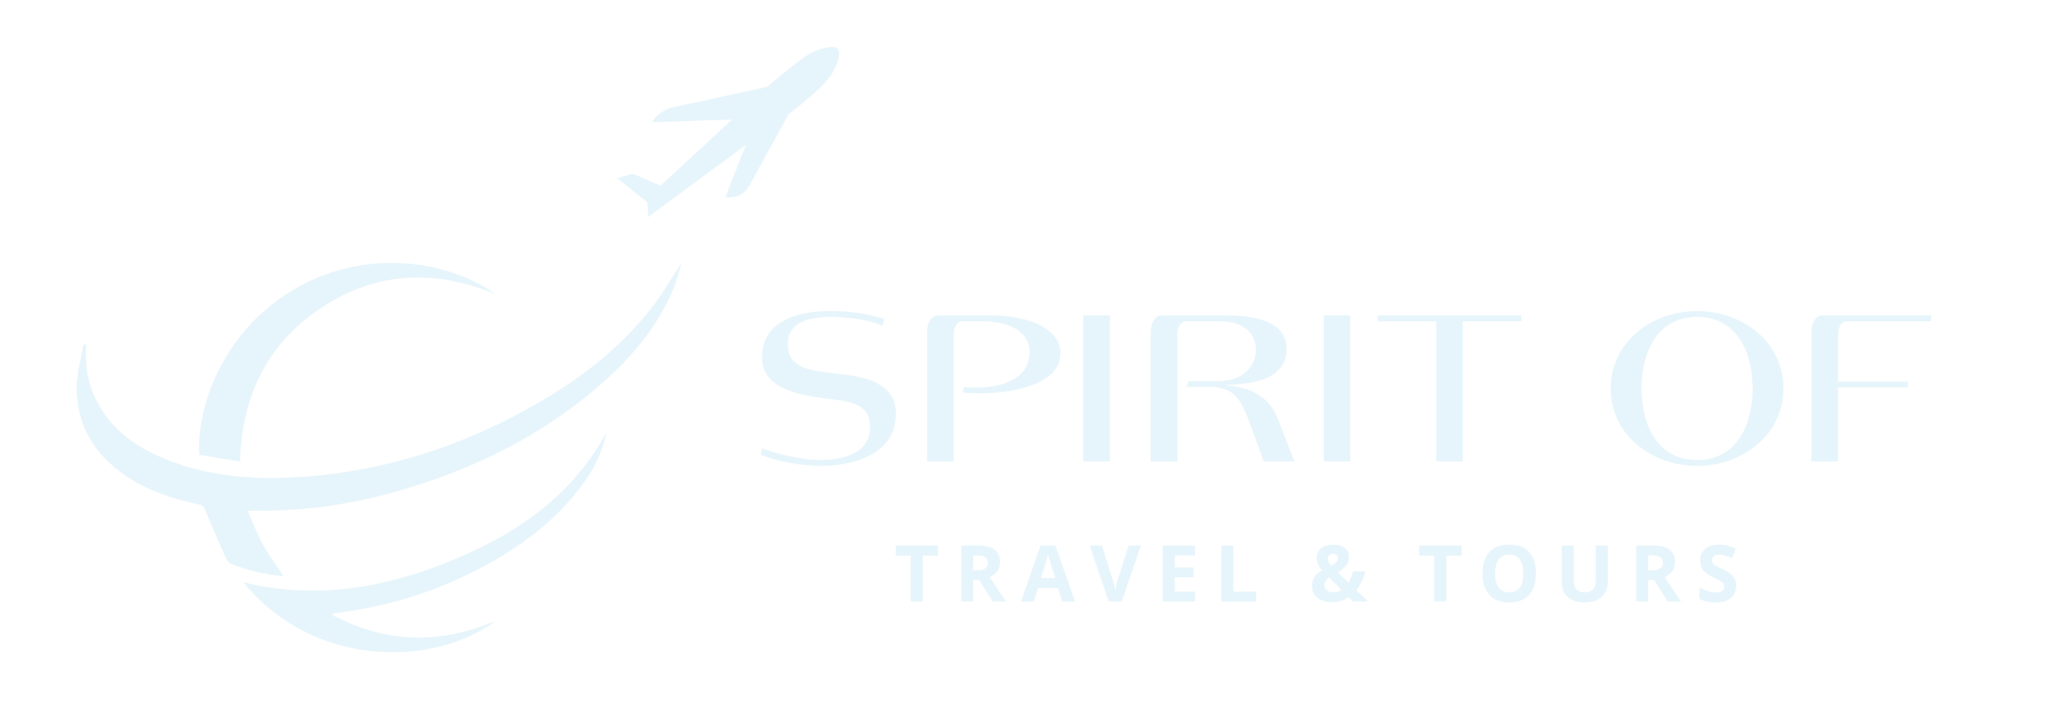 Spirit of travel logo_transparent